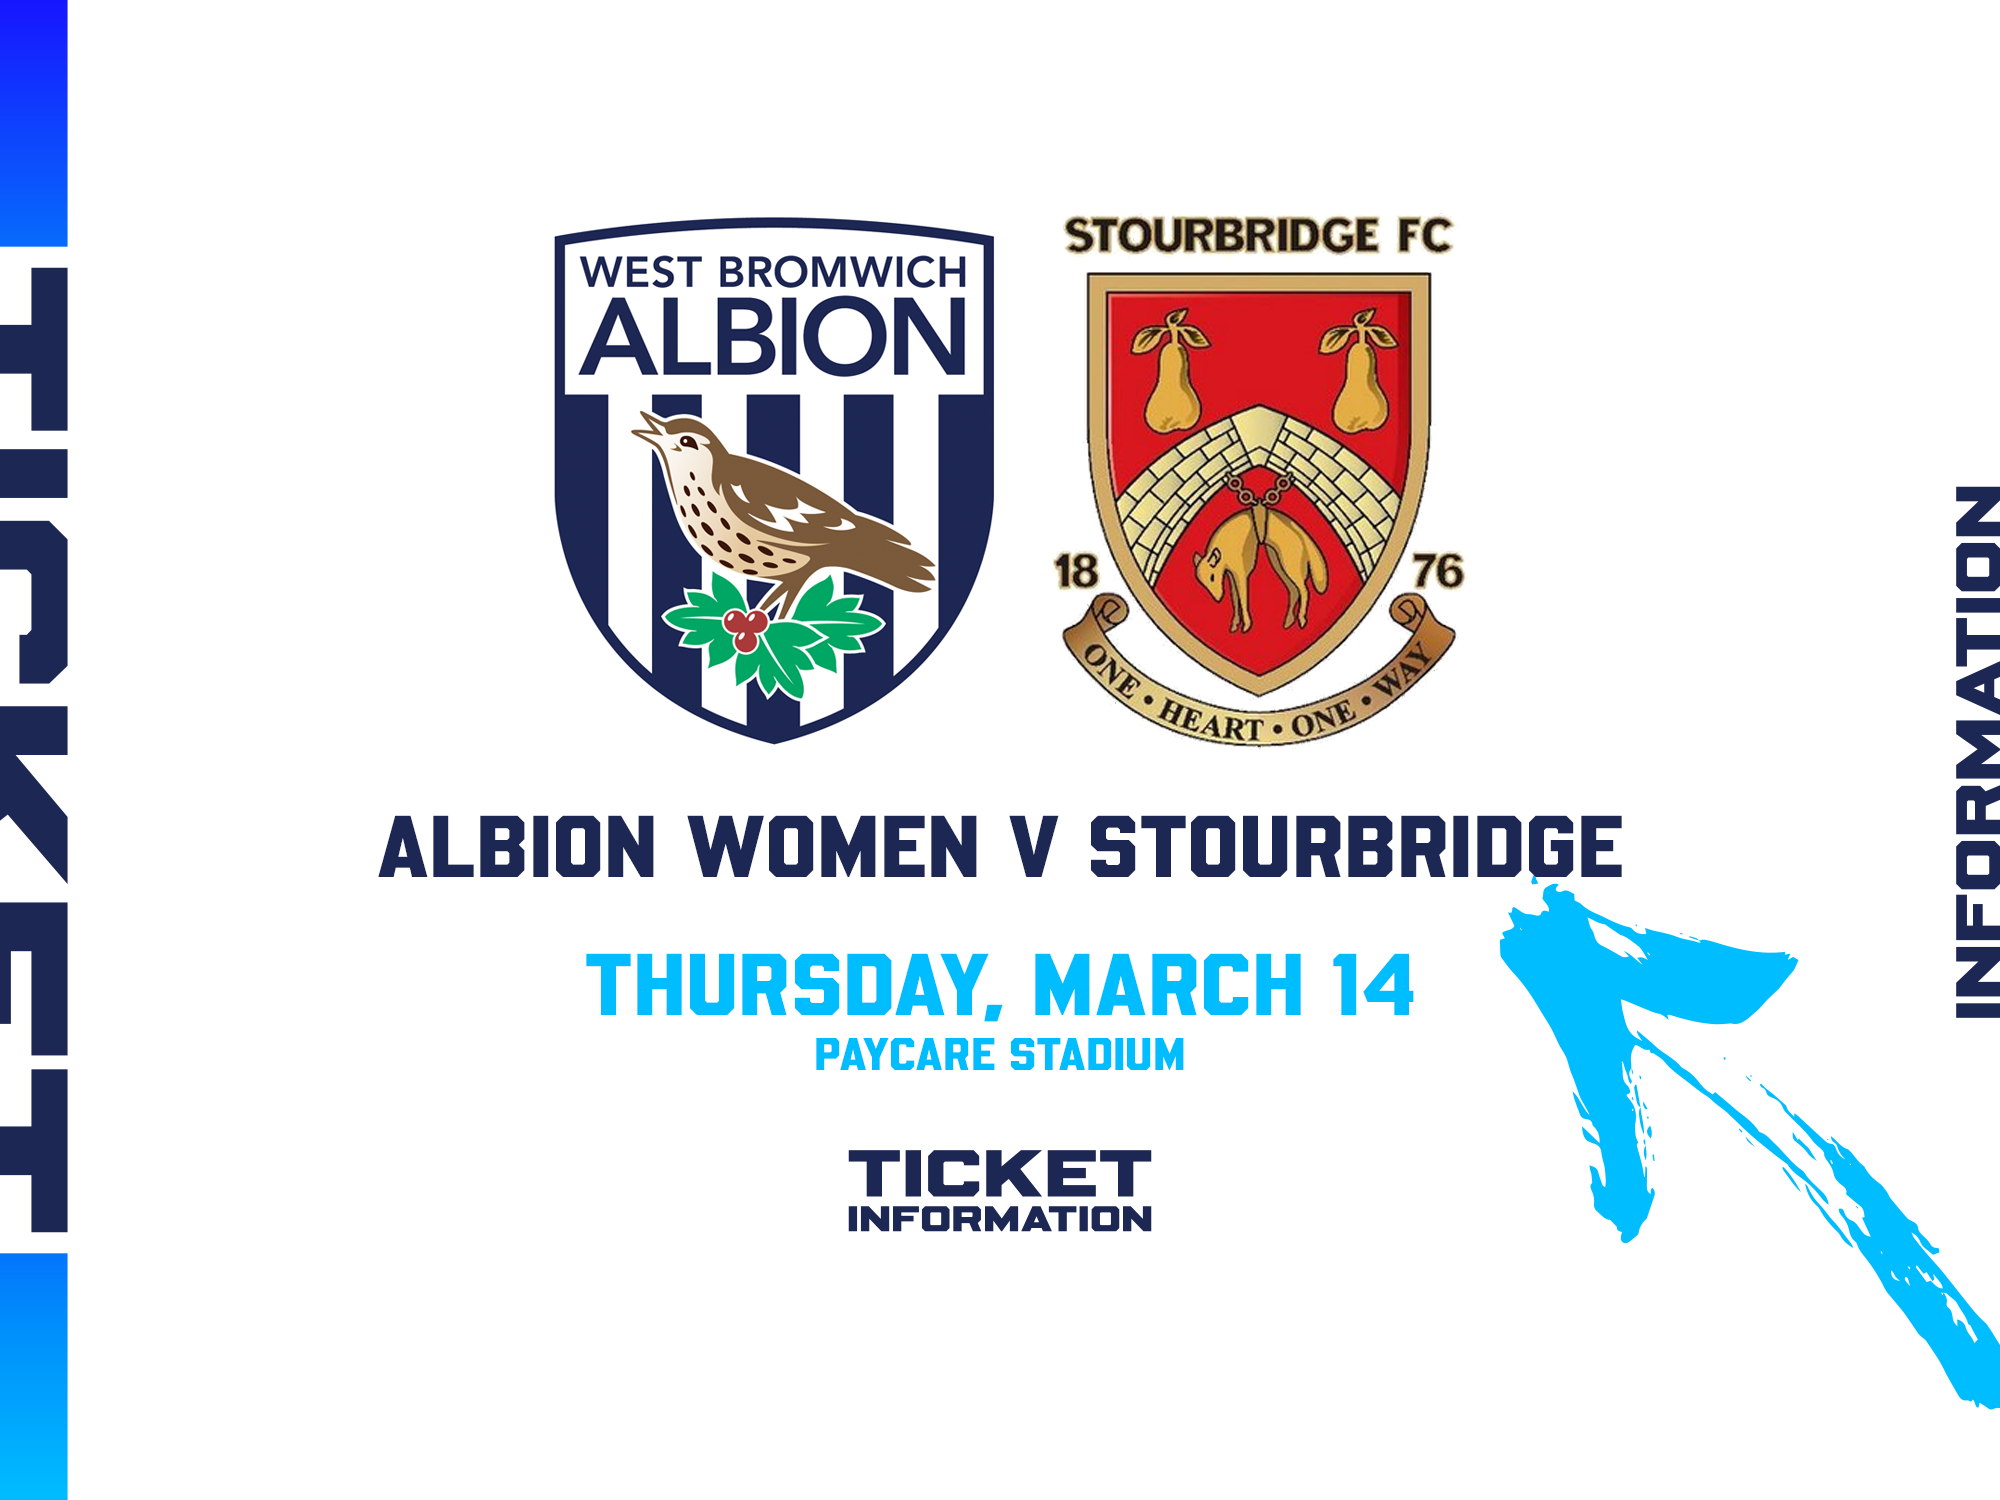 Albion Women ticket information for Stourbridge